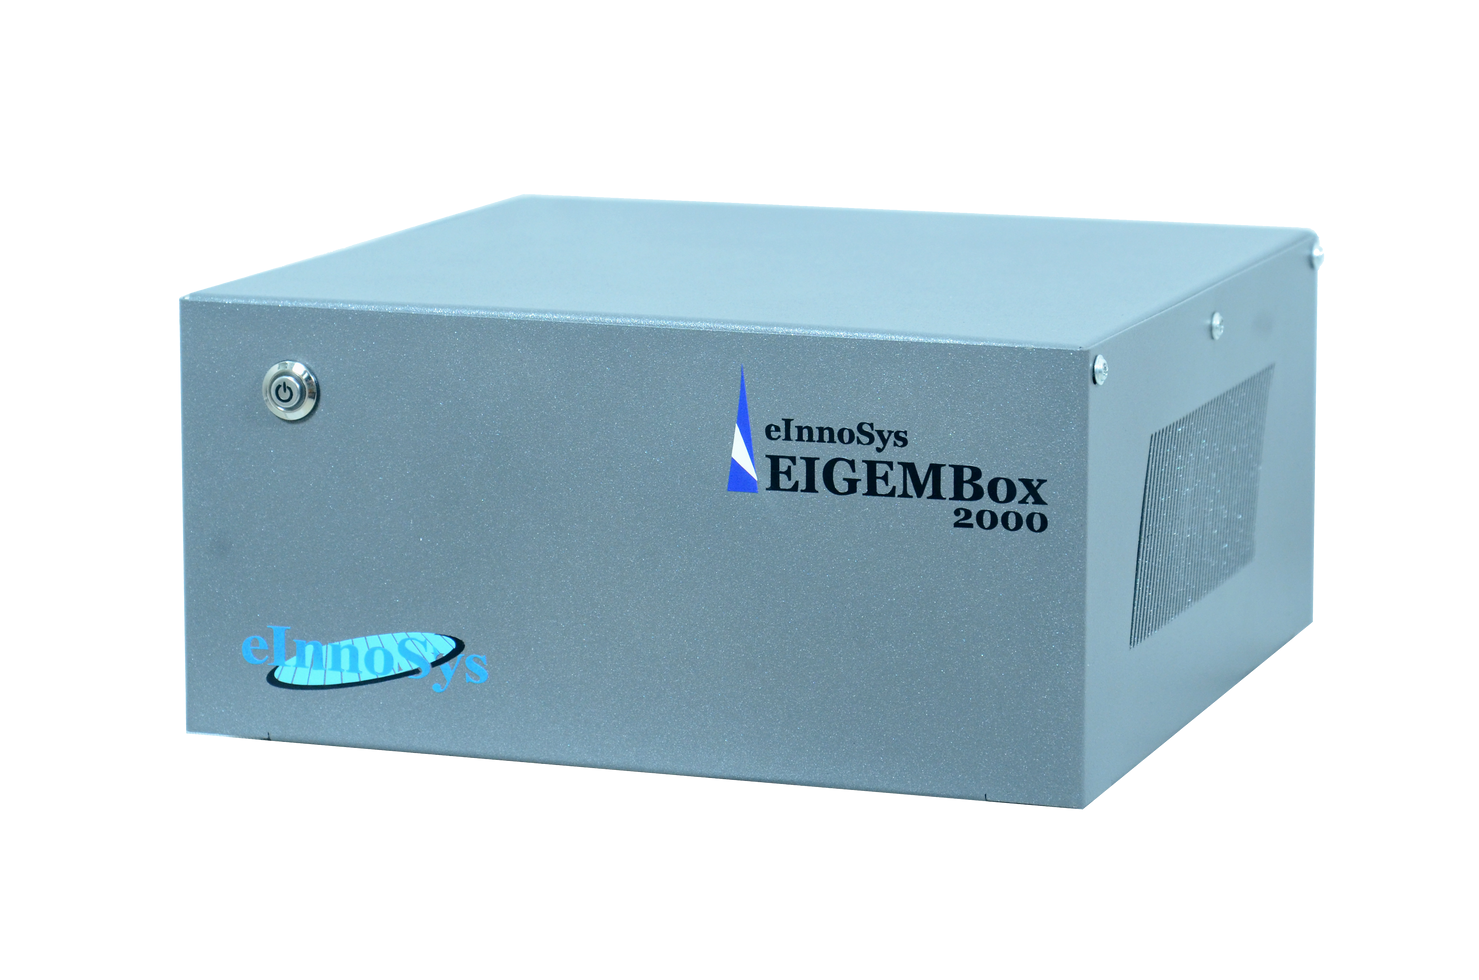 EIGEMBox2000 - SECS/GEM for Old/Legacy Equipment